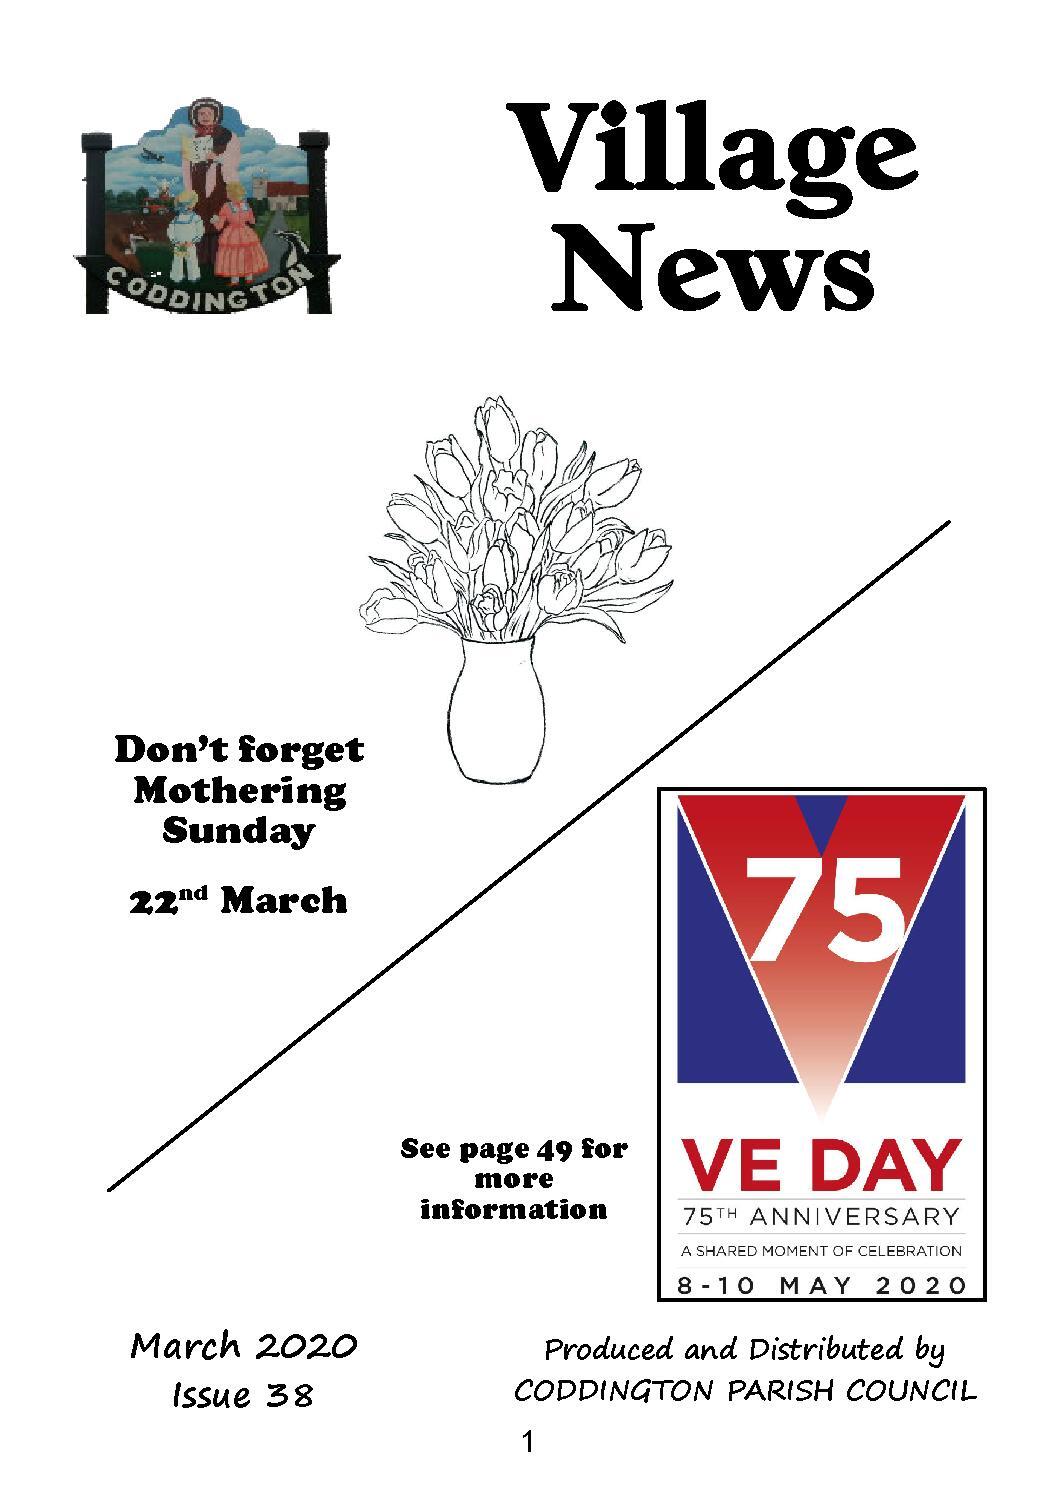 Coddington Village News - March 2020